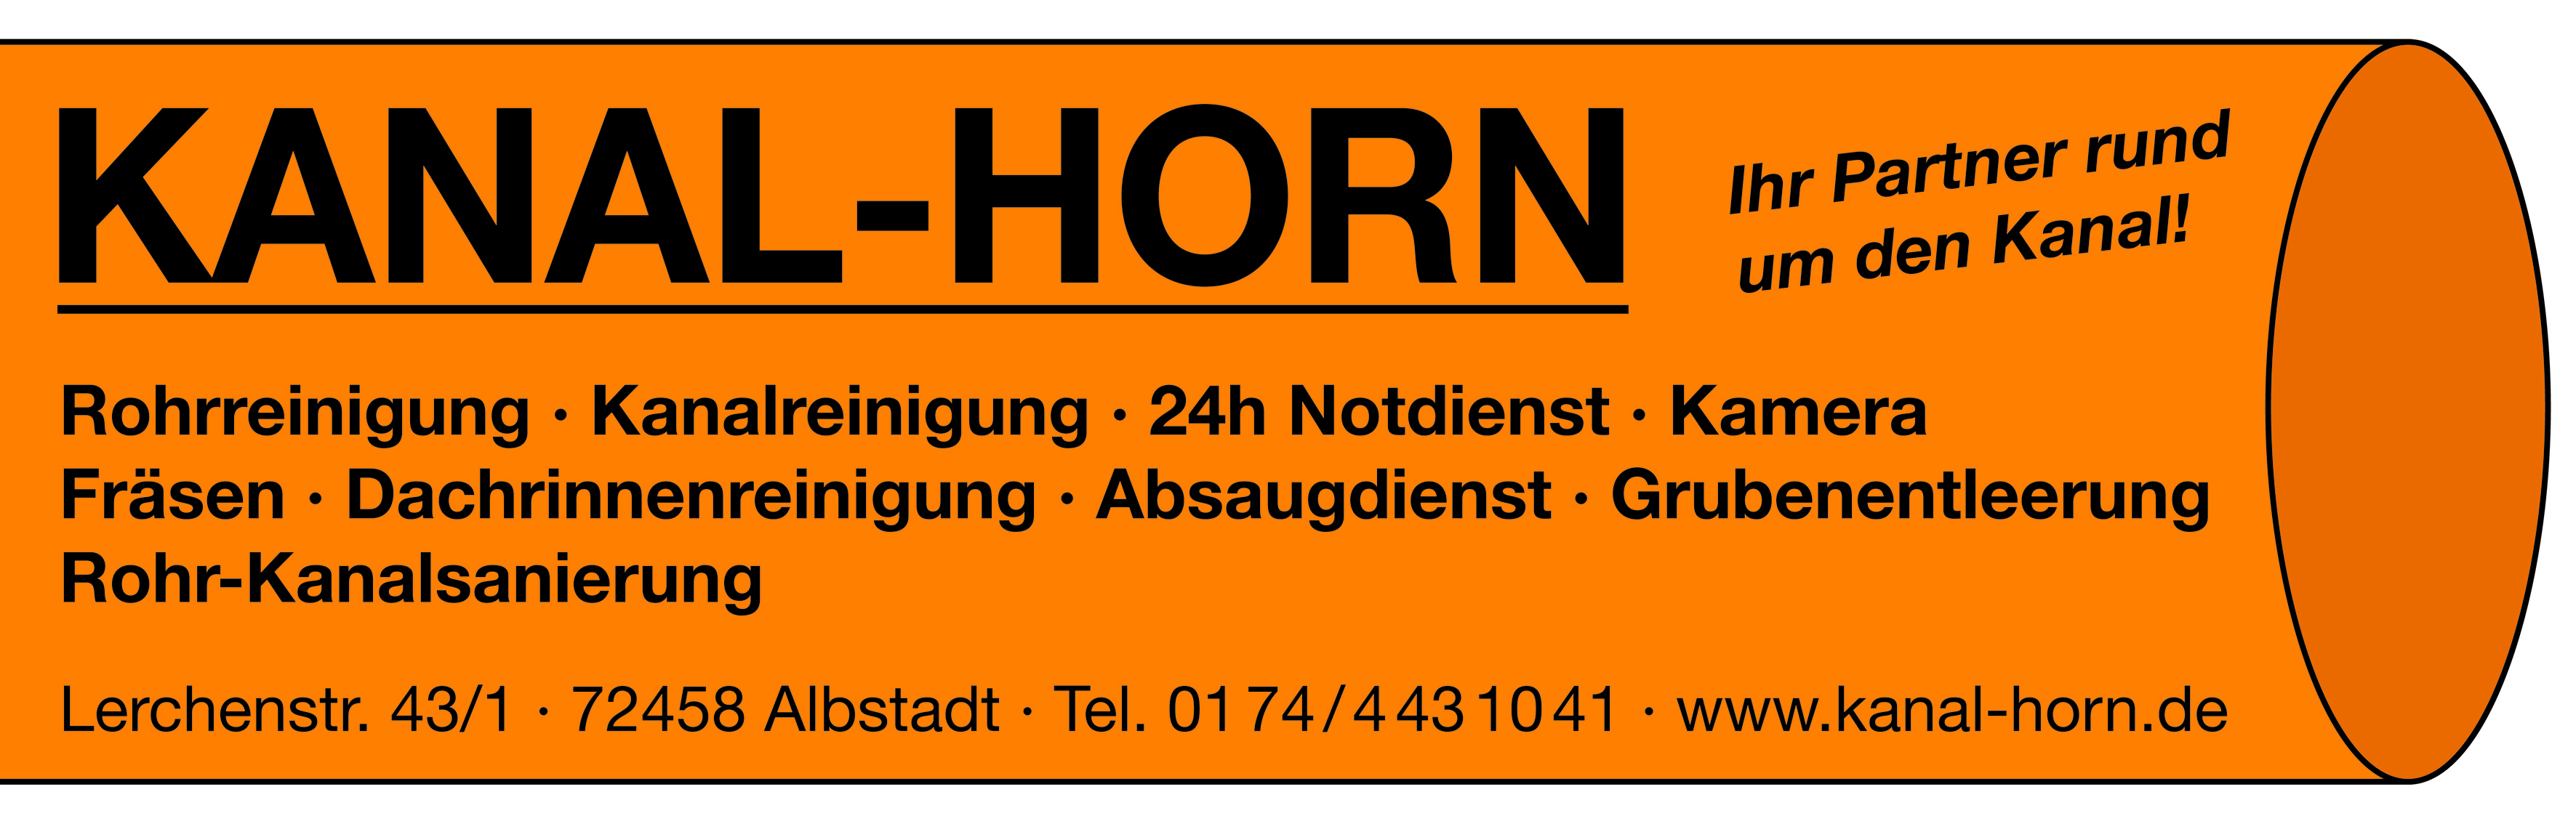 Bild 2 Kanal-Horn, Jügen Horn, 24h Notdienst in Albstadt